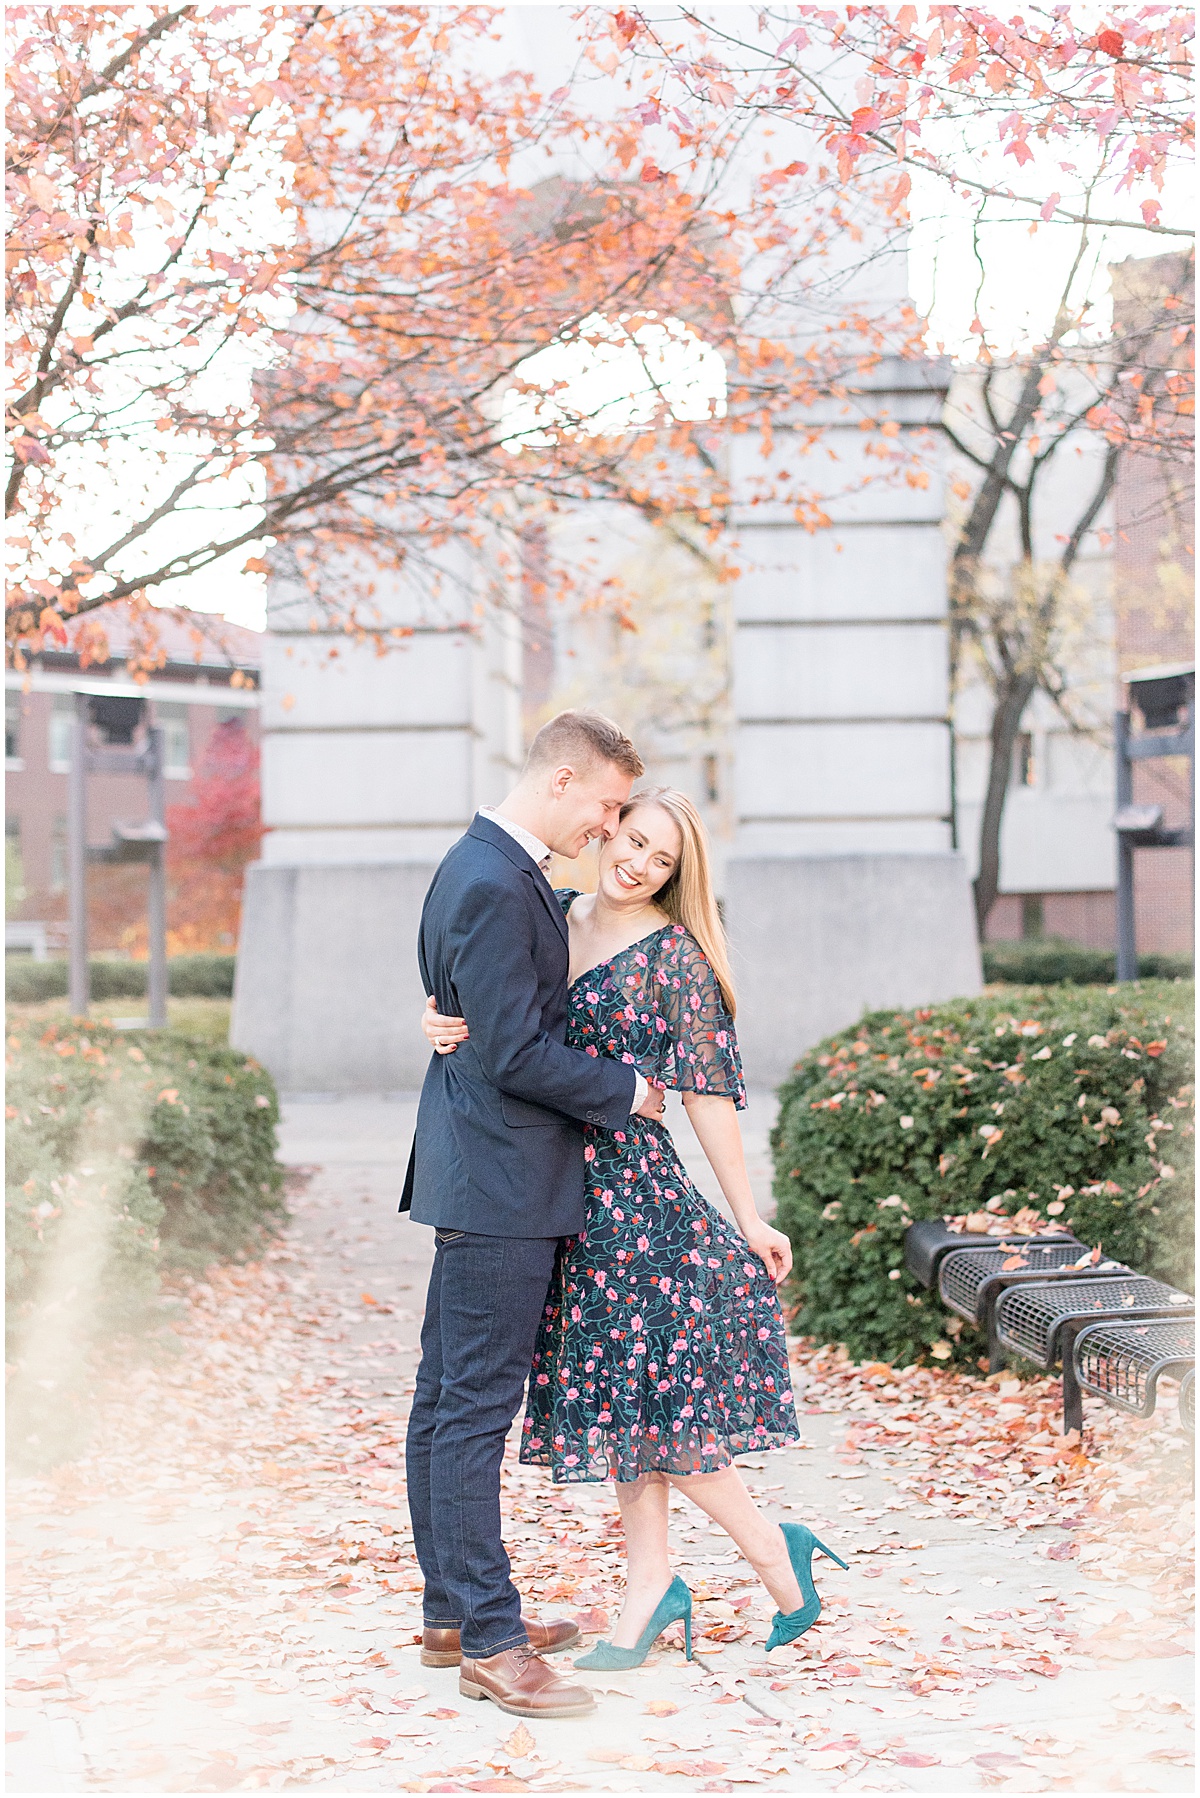 Fall engagement photos at Purdue University by Lafayette, Indiana Wedding Photographer Victoria Rayburn